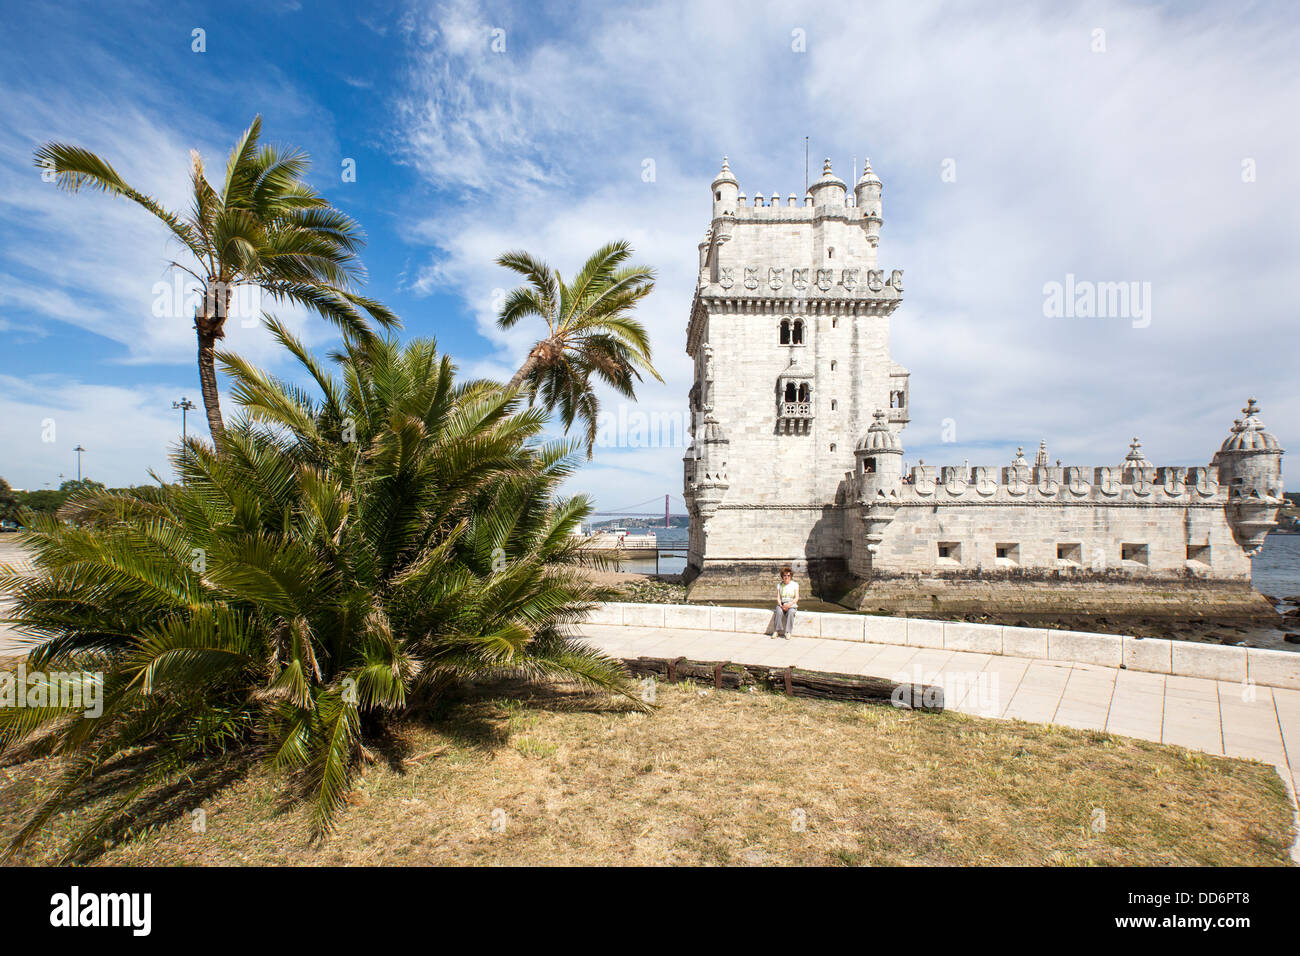 Belem Tower, Lisbon, Portugal, Europe Stock Photo